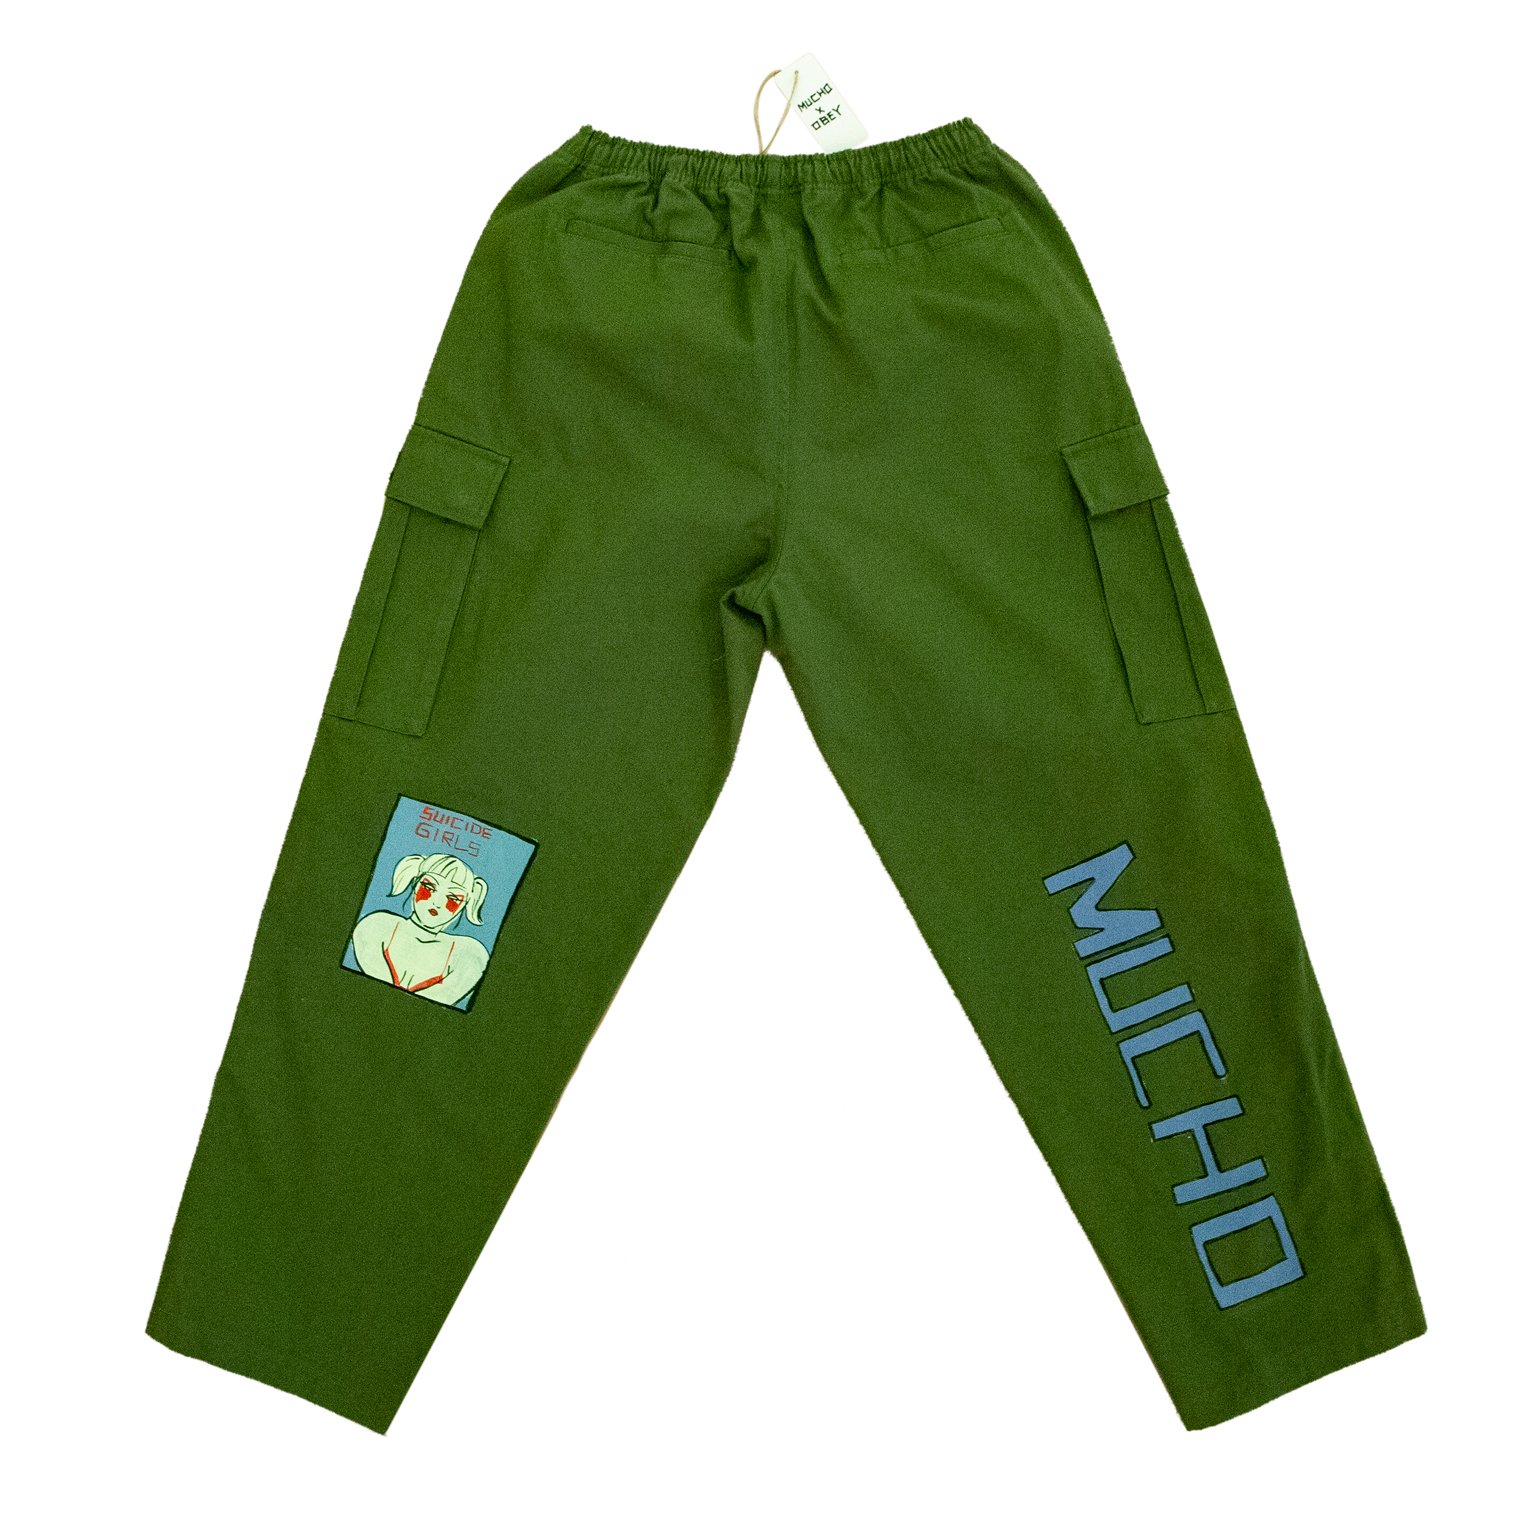 ObeyXMucho-Green-Pants-02.jpg